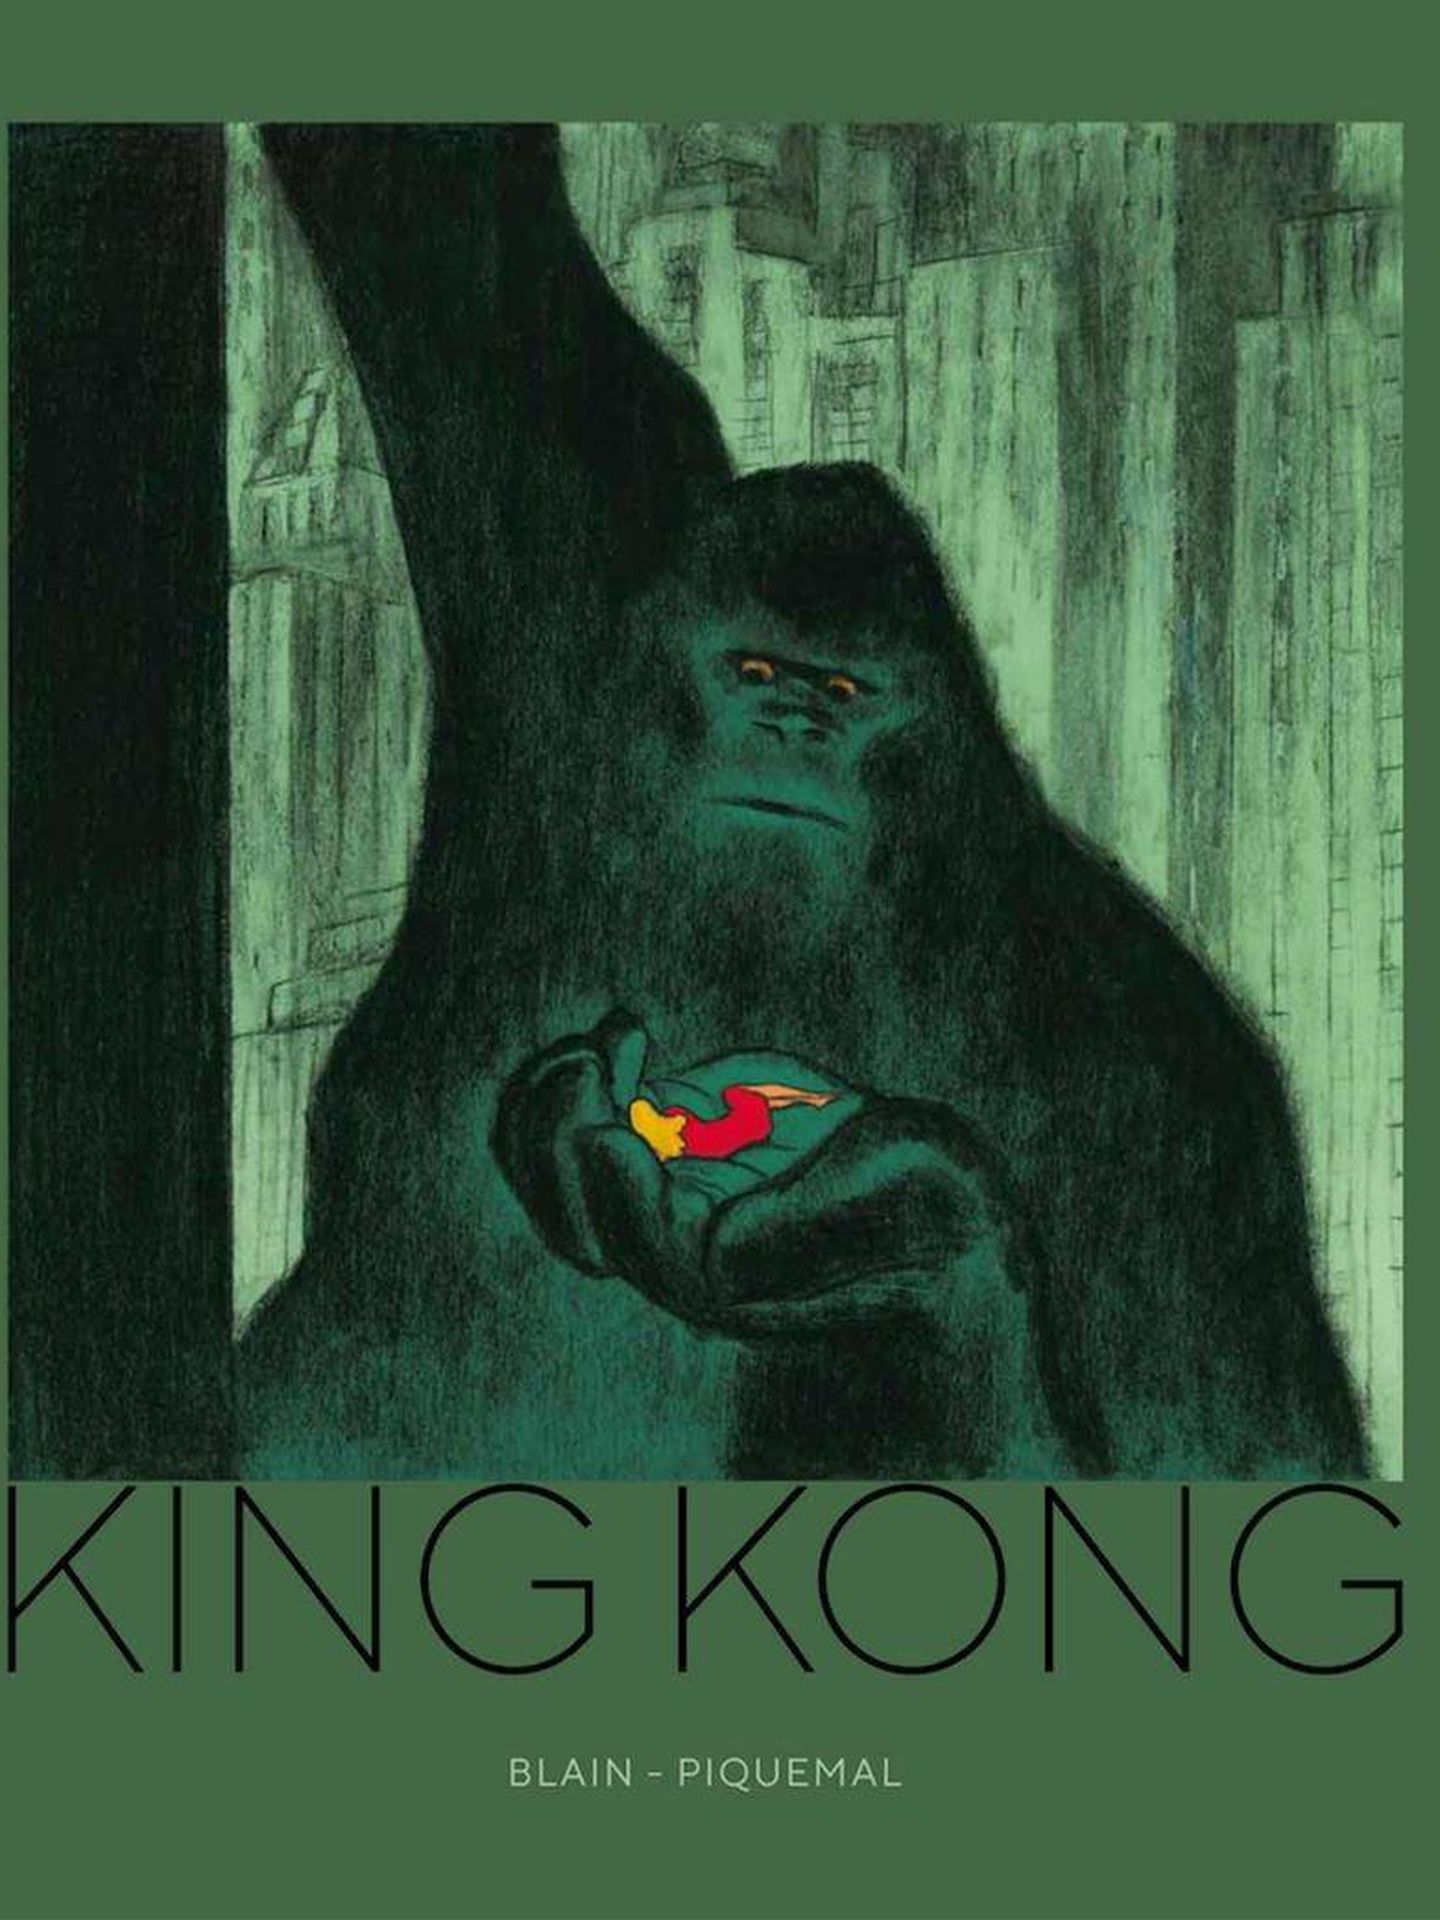 'King Kong'.